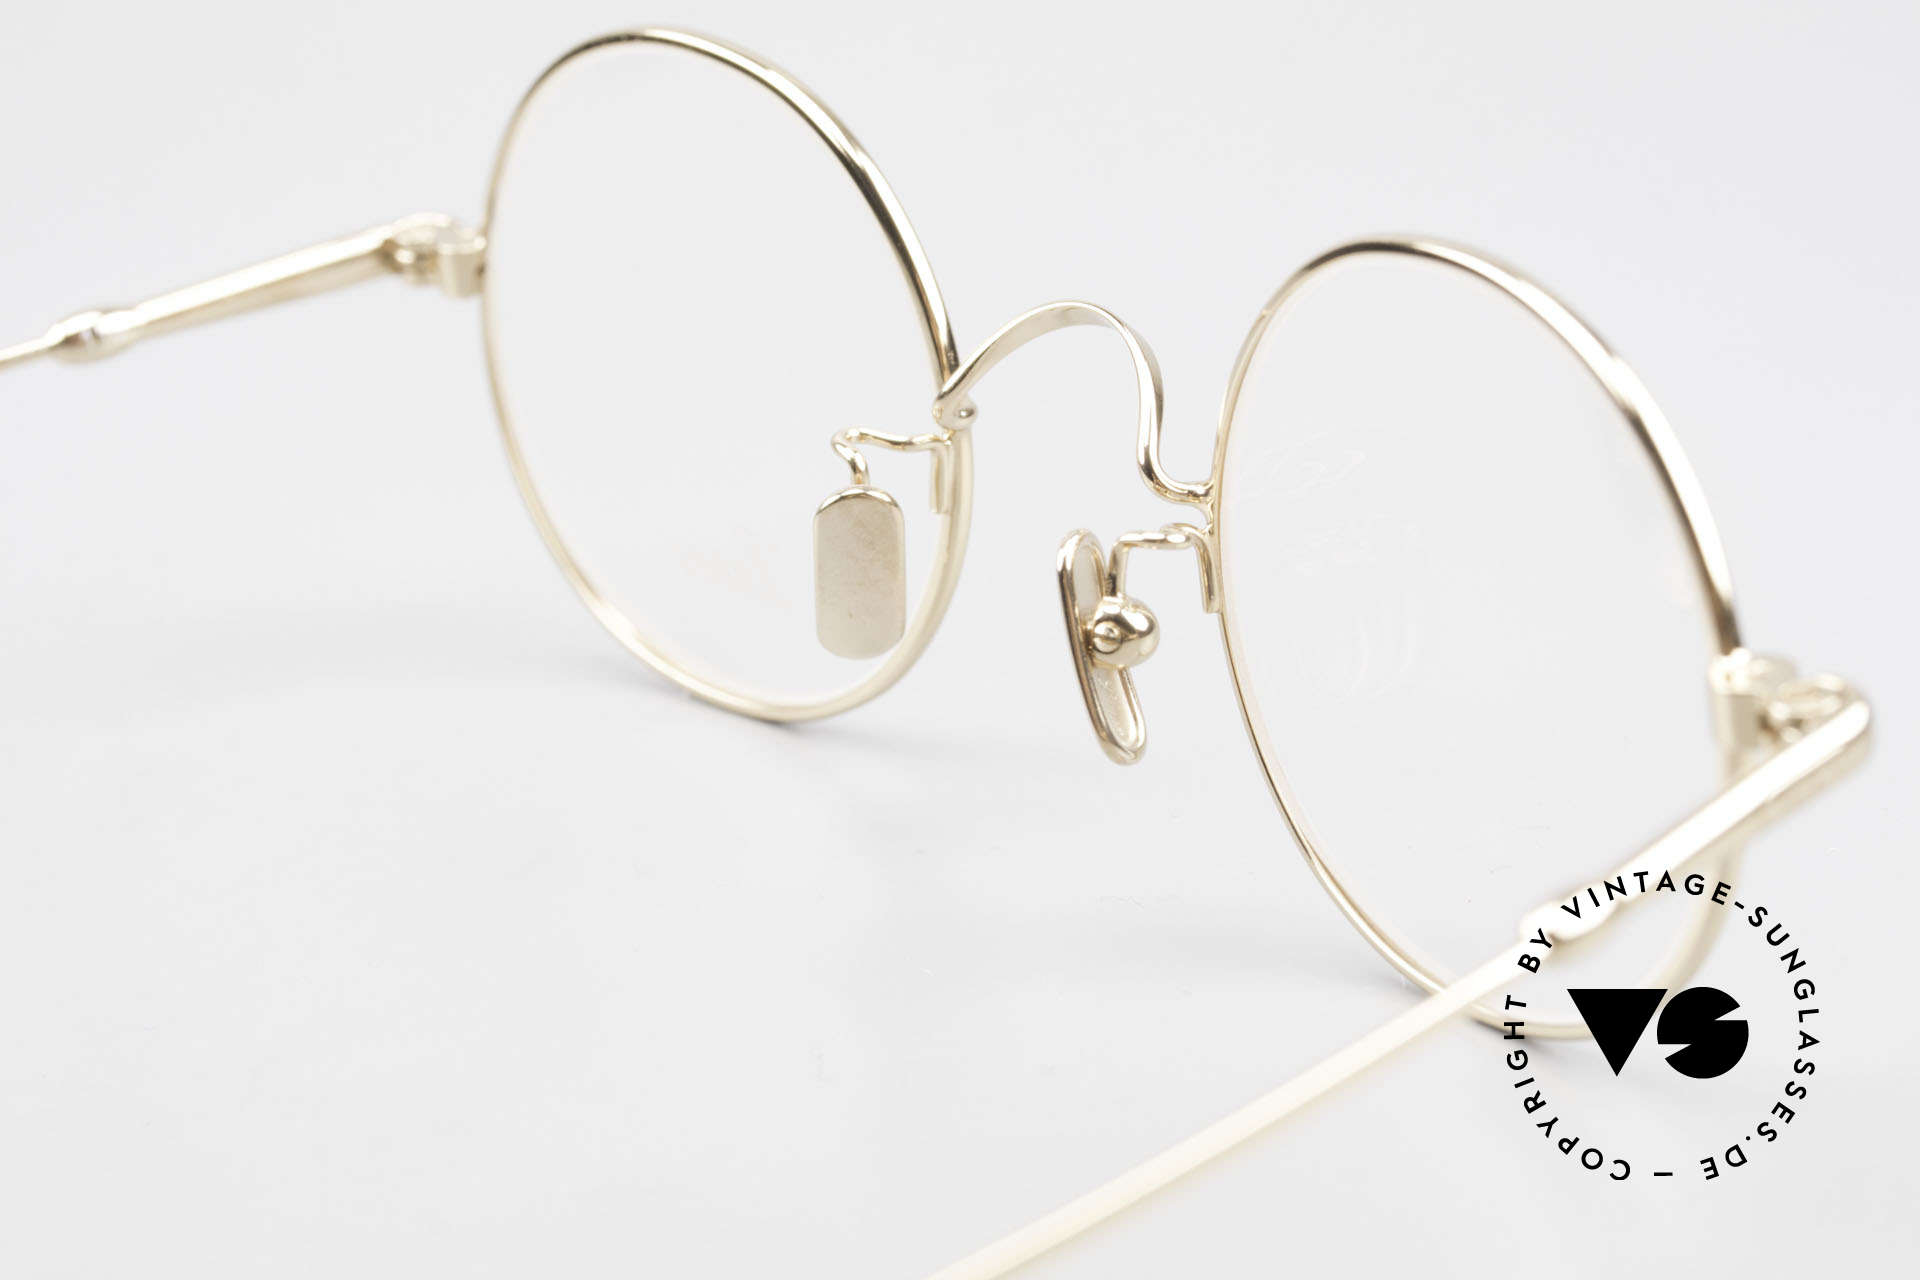 Lunor V 110 Lunor Round Glasses GP Gold, Size: medium, Made for Men and Women